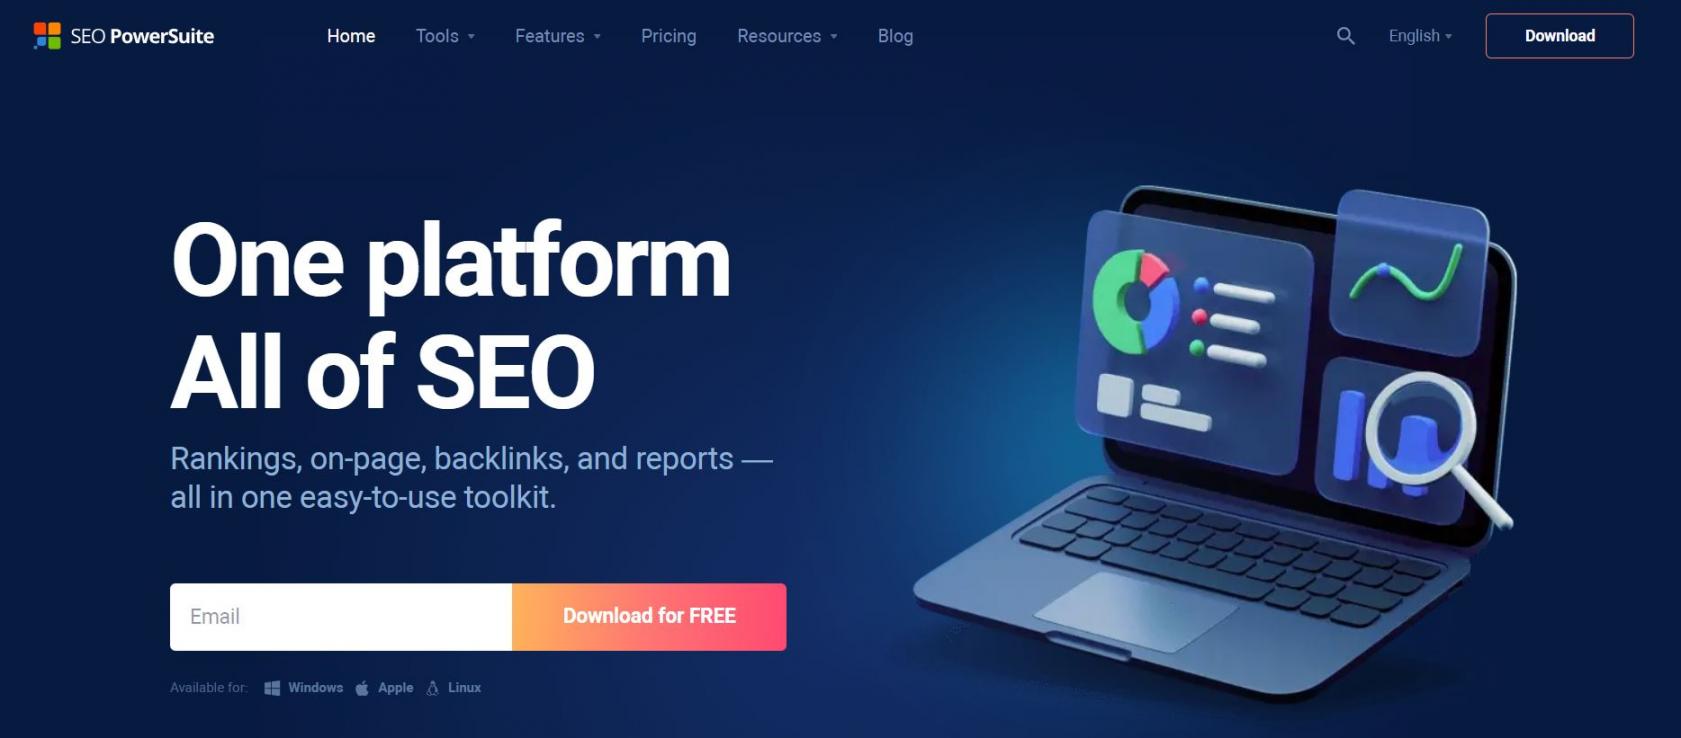 SEO PowerSuite home page